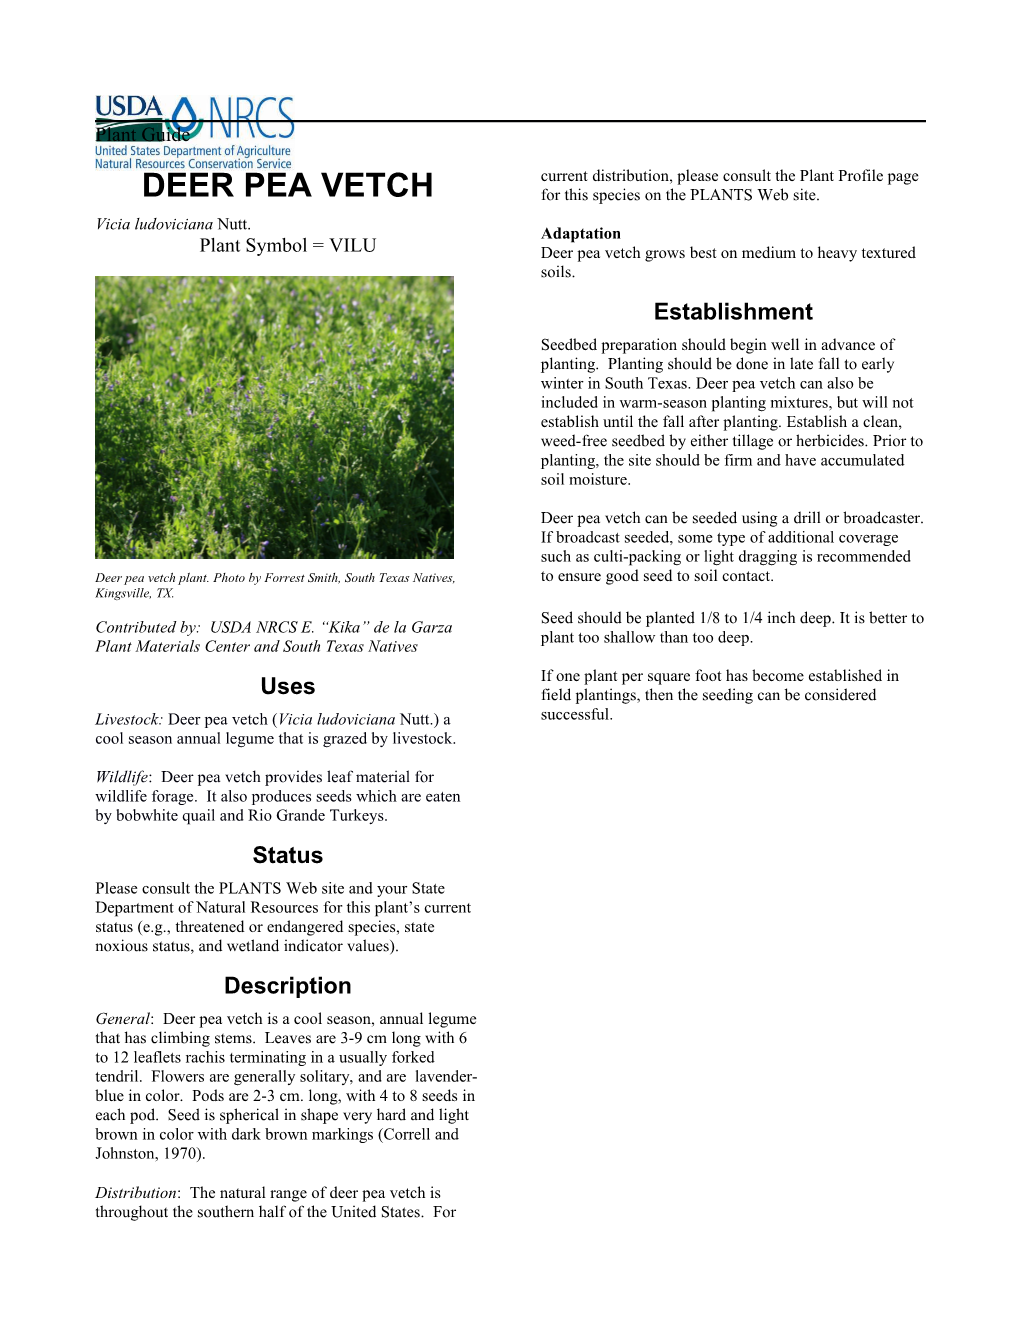 Deer Pea Vetch Plant Guide